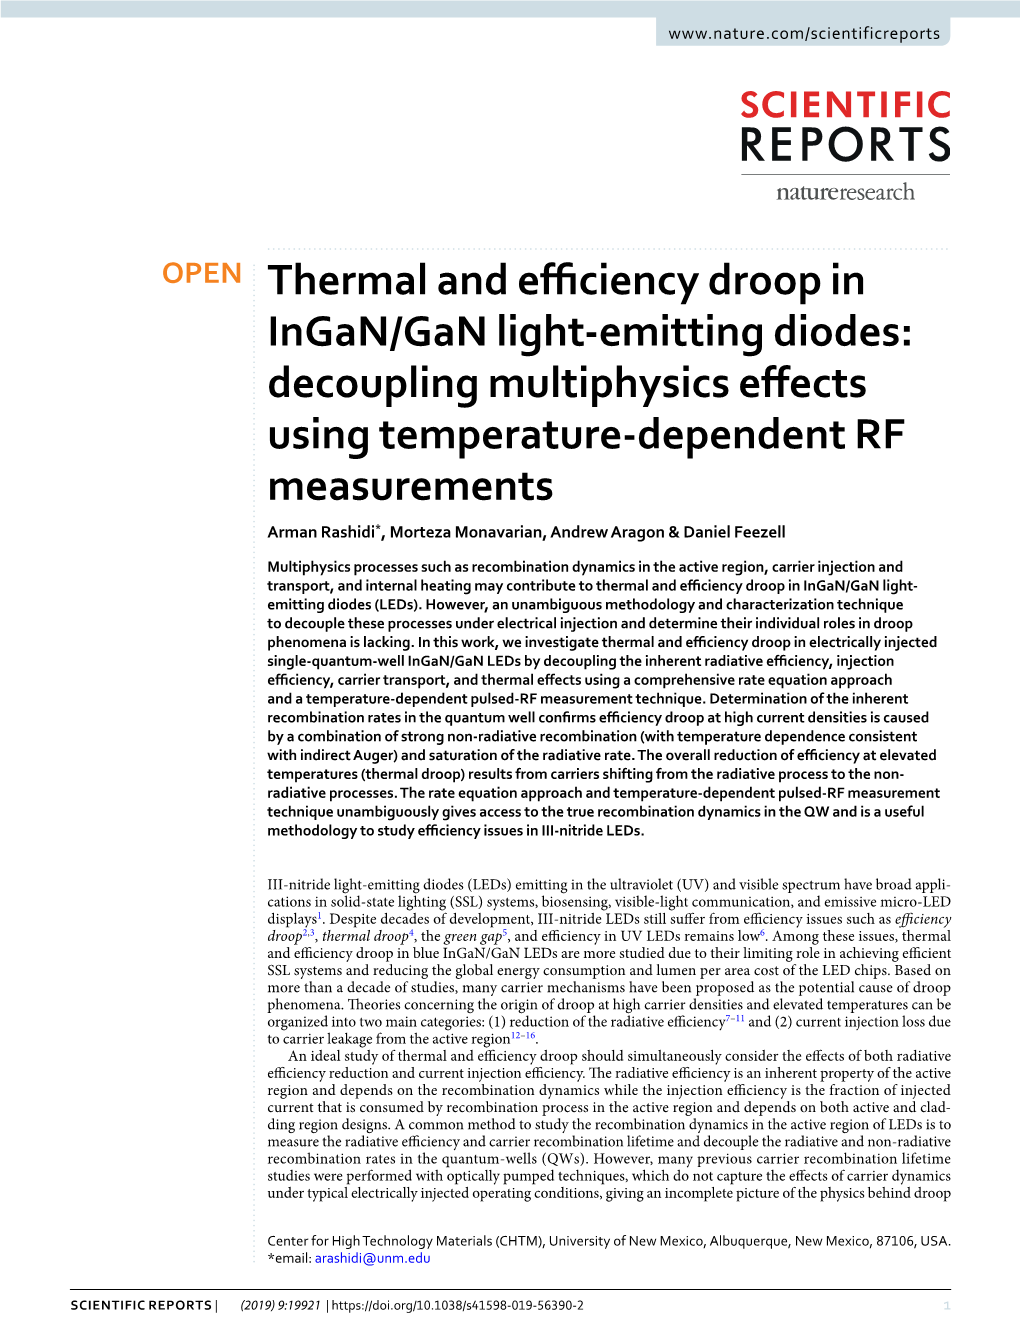 Thermal and Efficiency Droop in Ingan/Gan Light-Emitting Diodes